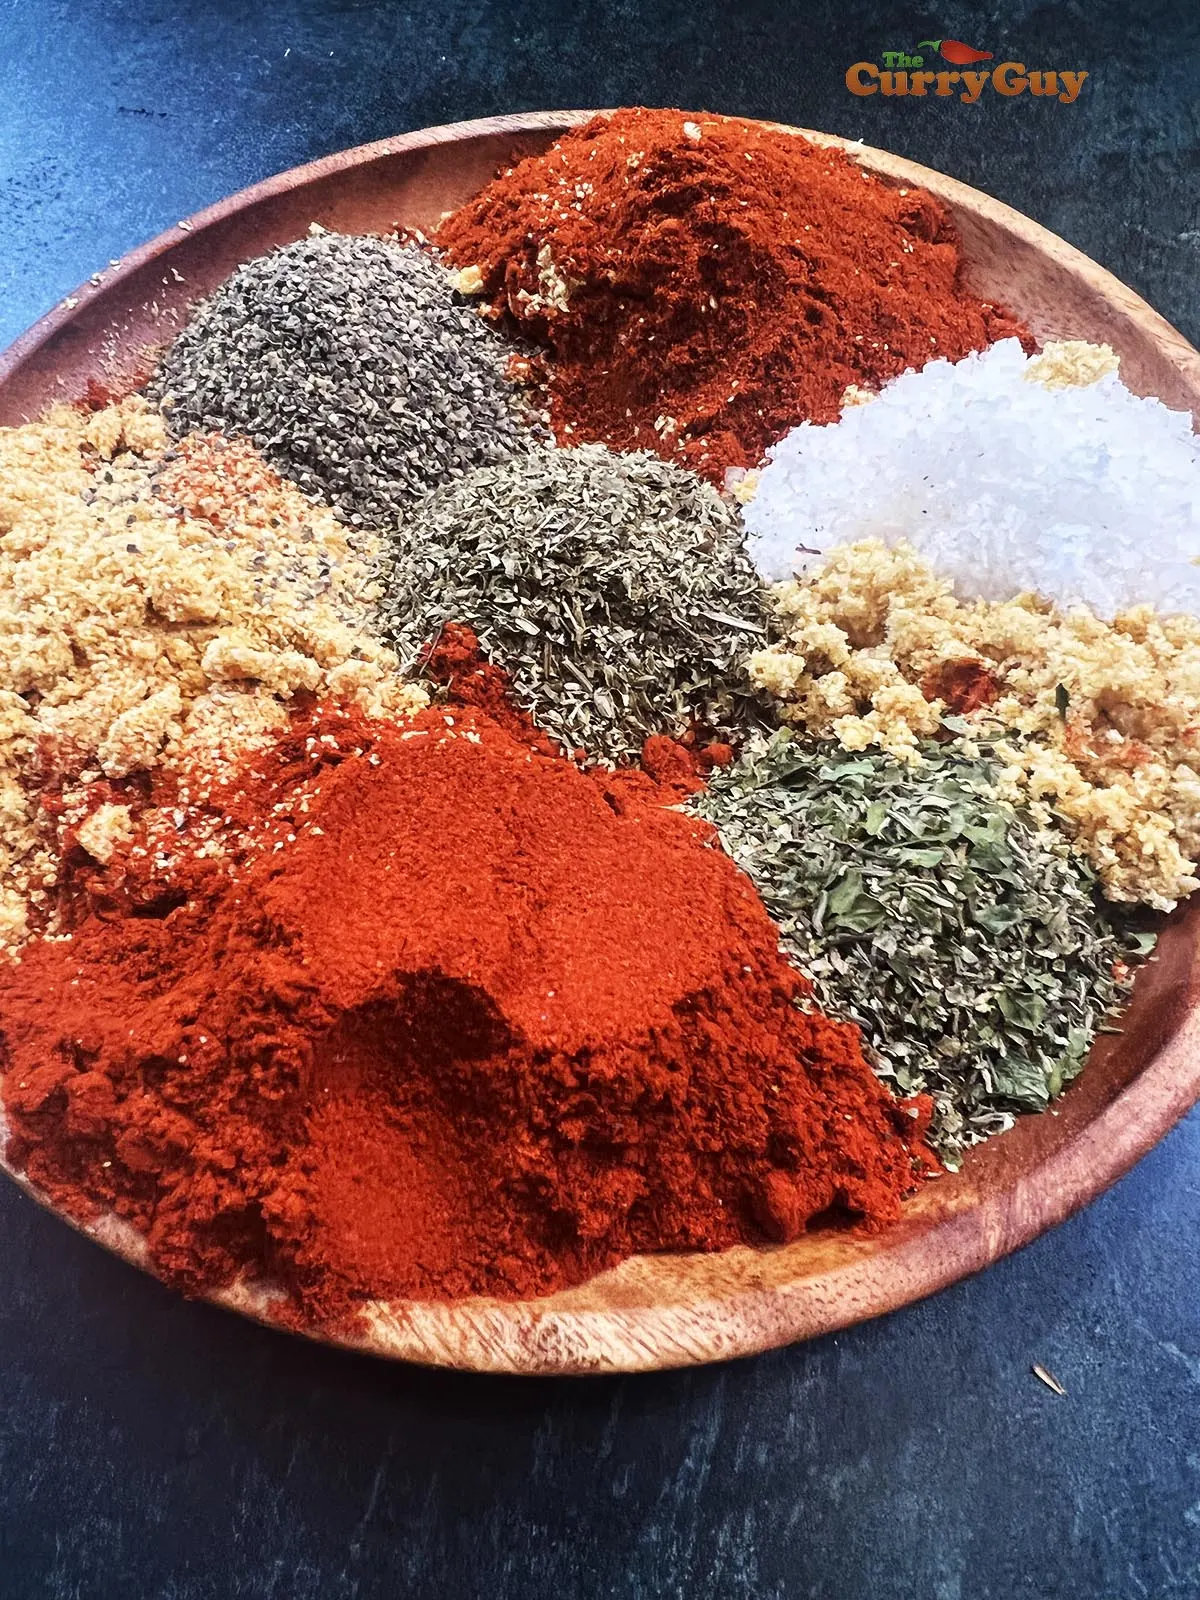 Ingredients for Cajun seasoning